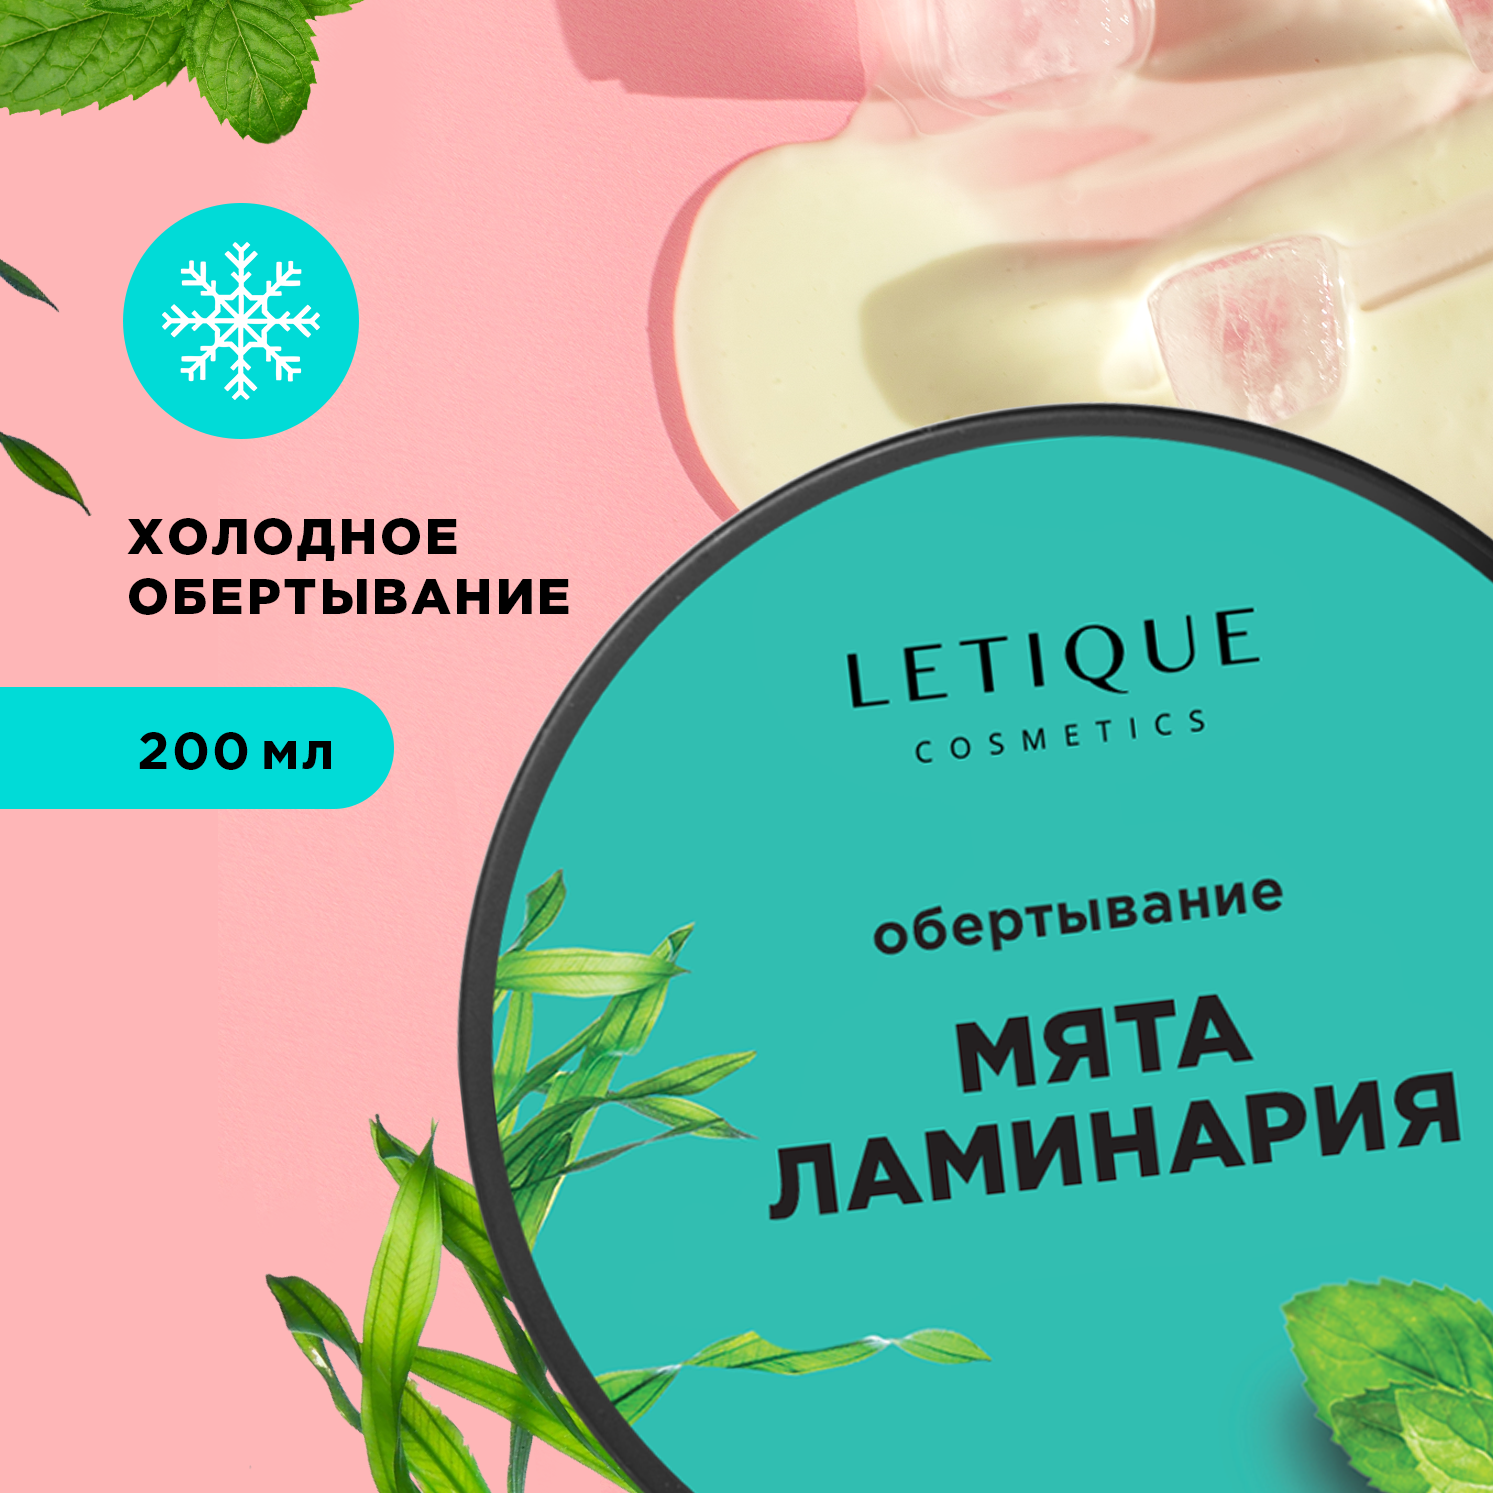 Letique Cosmetics Холодное обертывание с ламинарией и мятой 200 мл